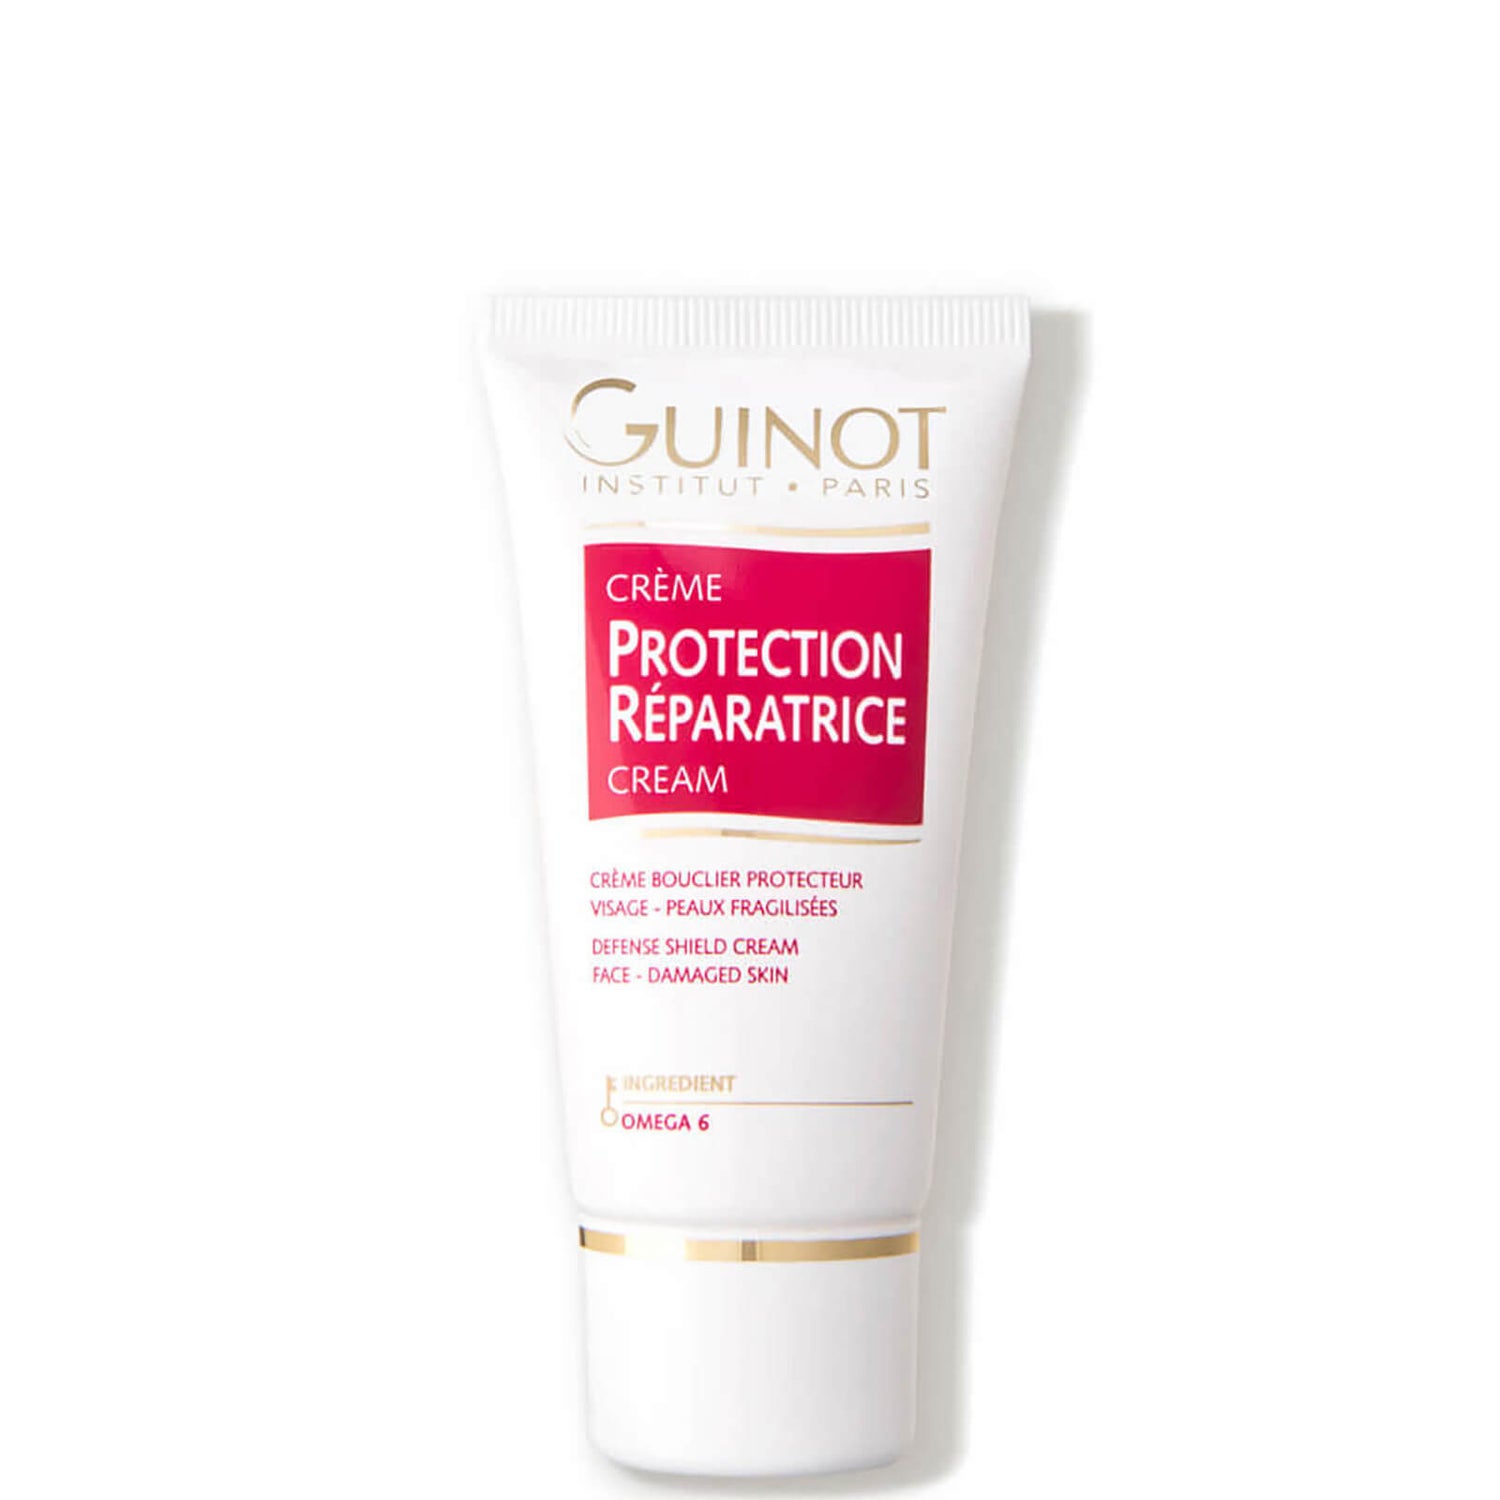 Guinot Creme Protection Reparatrice Face Cream (1.7 oz.)